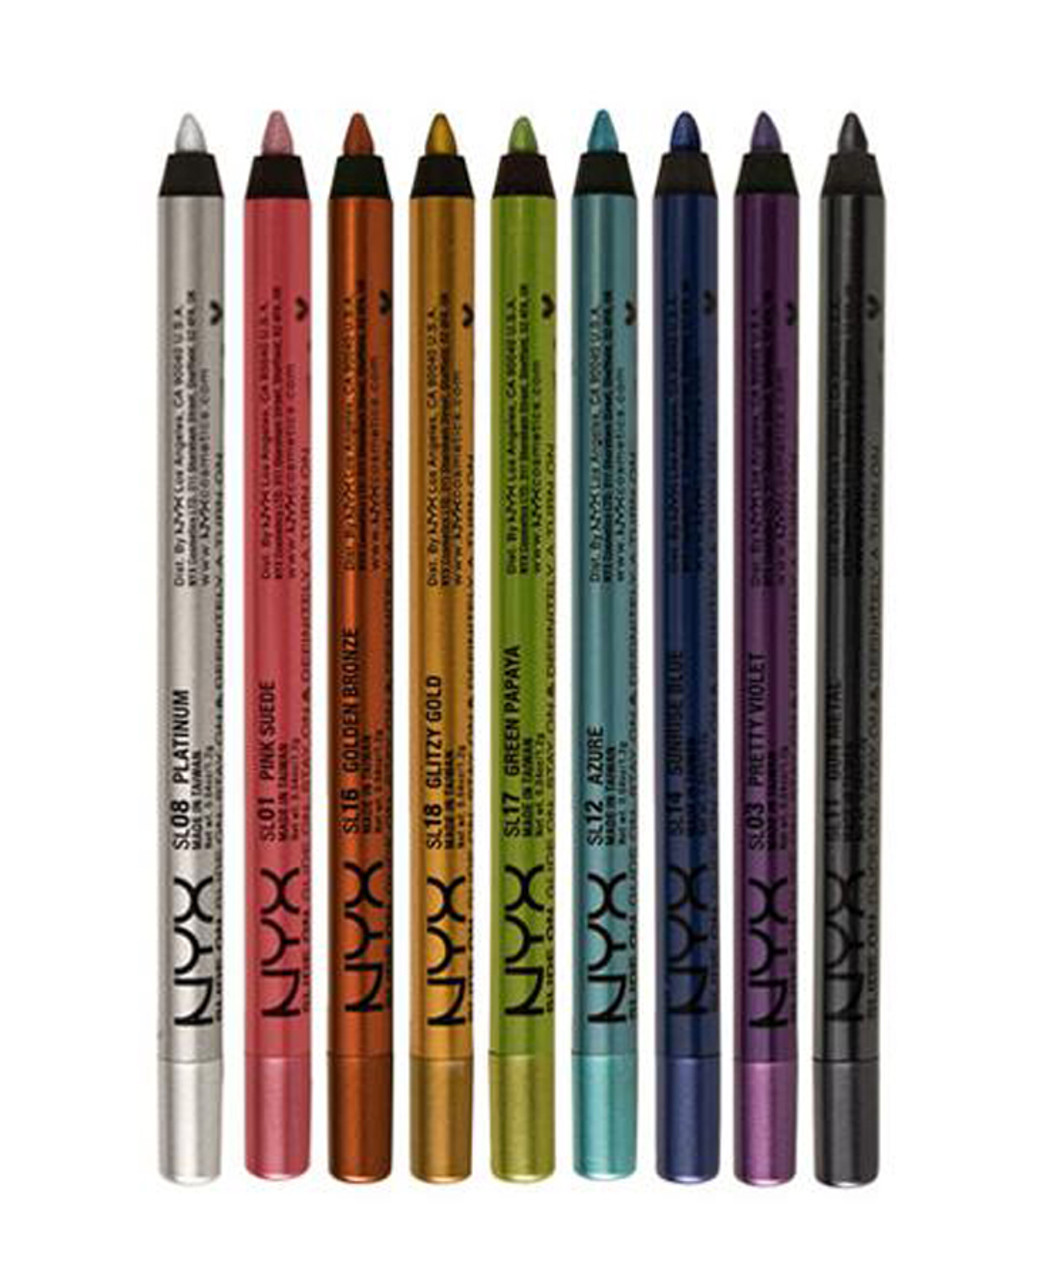 NYX PROFESSIONAL MAKEUP Slim Eye Pencil Eyeliner Pencil - Black Black 1  Count (Pack of 1)